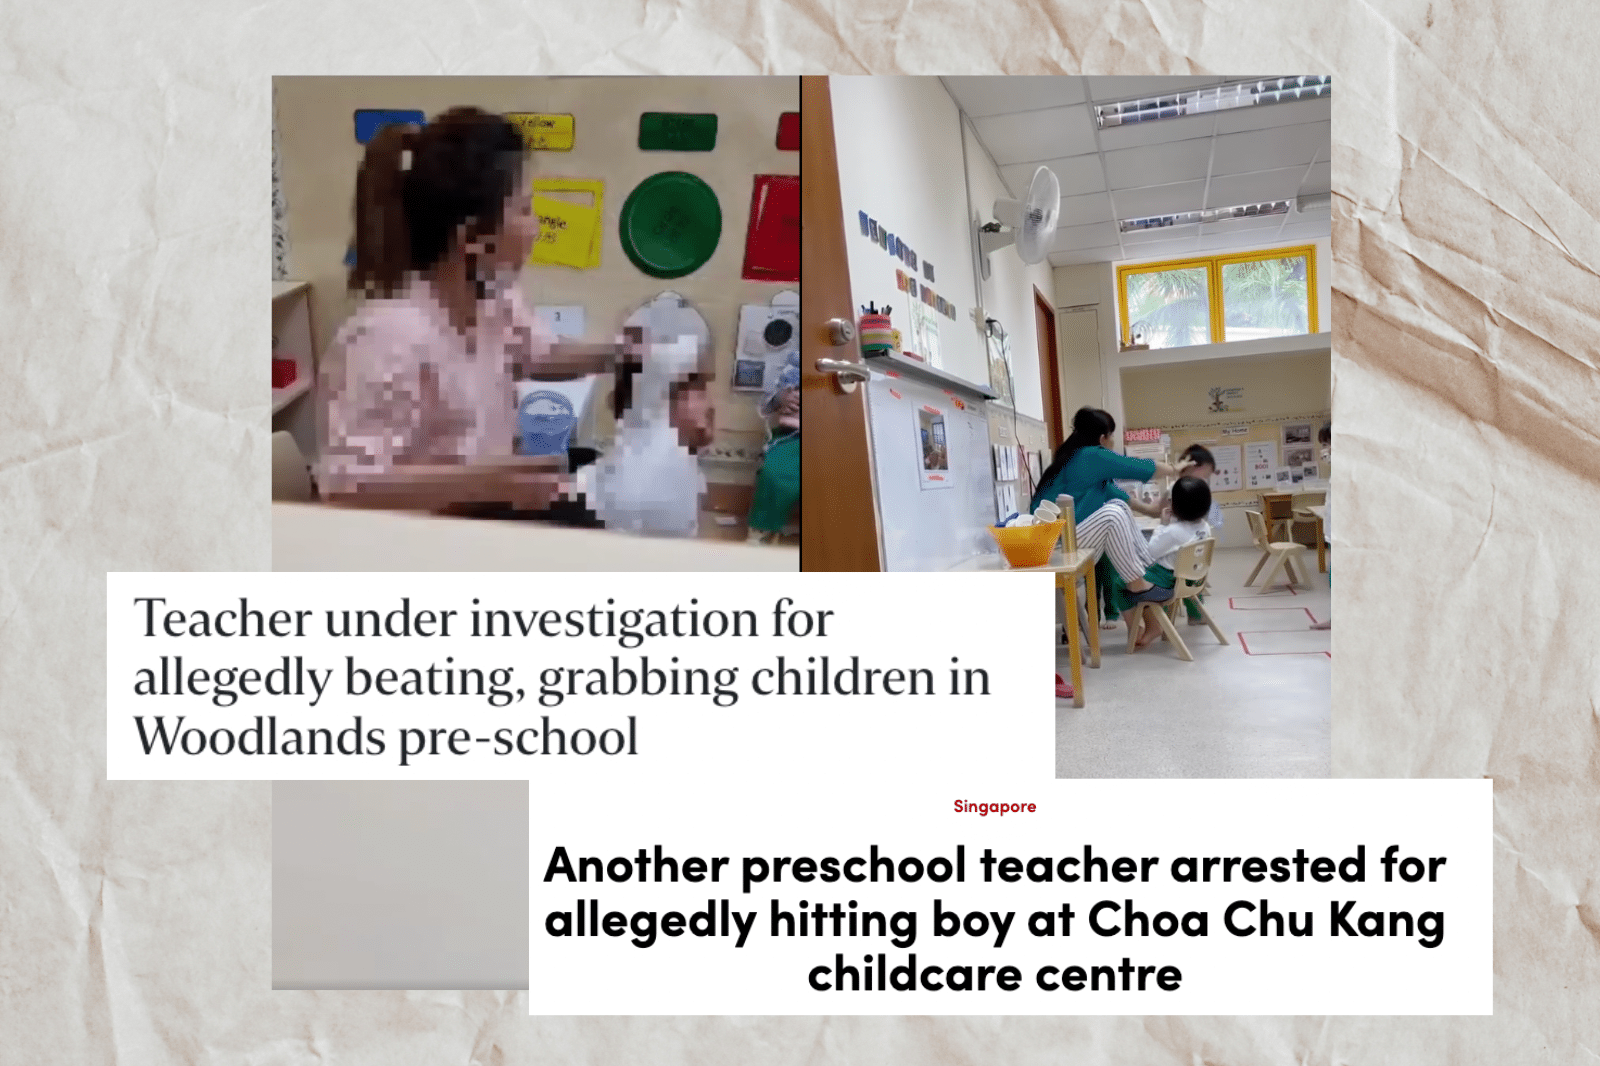 Kinderland preschool teachers under investigation for alleged abuse